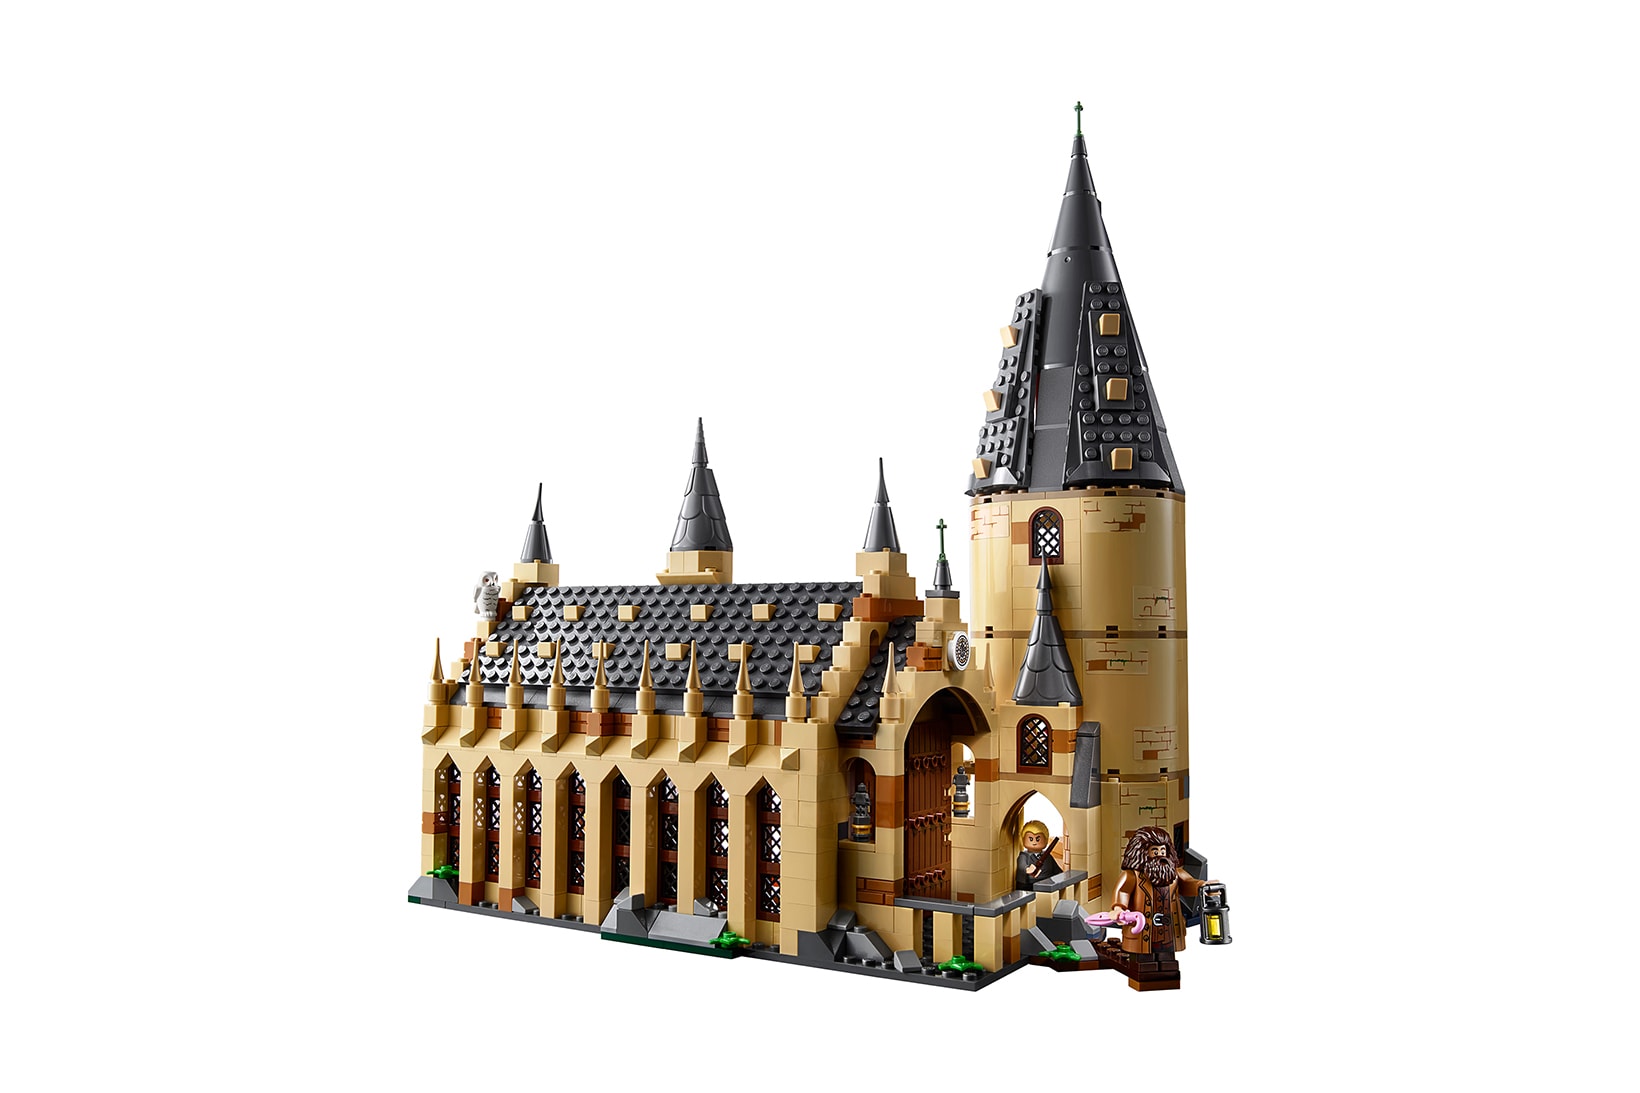 LEGO Harry Potter Hogwarts Great Hall Set 2018 february release date info